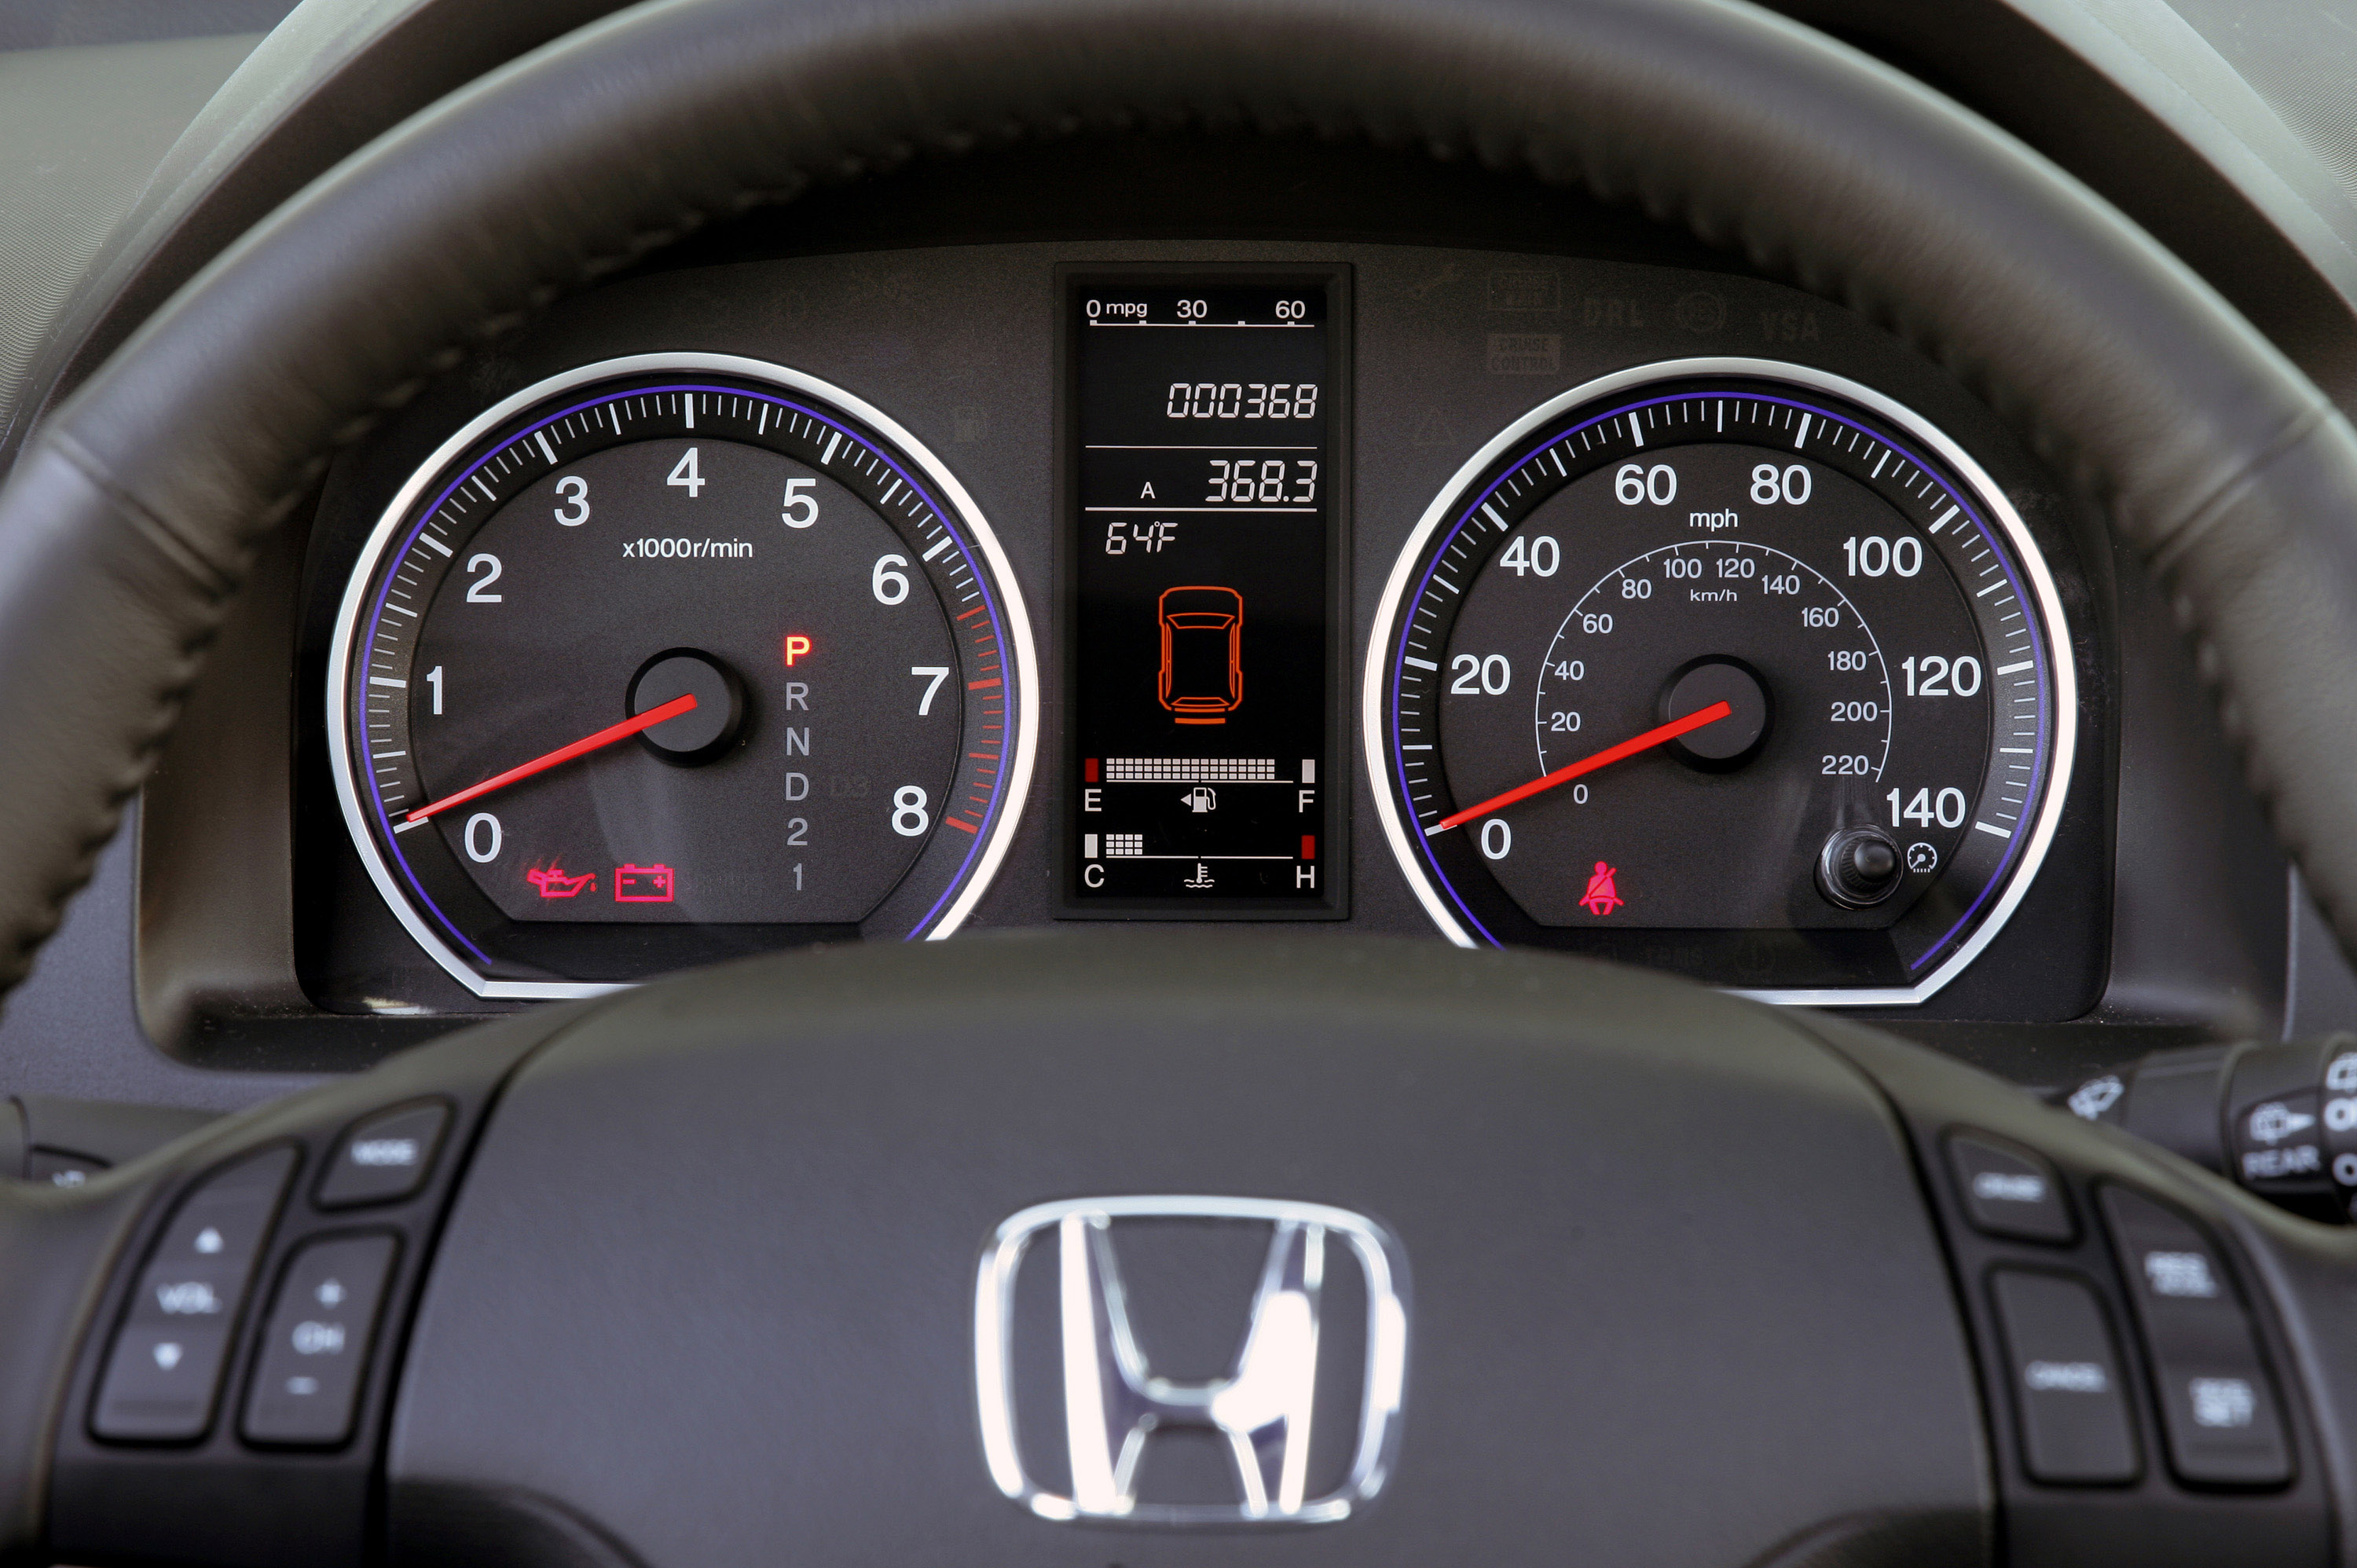 Honda v панель. Хонда CRV 2008 года панель приборов. Honda CRV 3 приборная панель. Honda CR-V 2008 приборная панель. Панель Honda CRV 3 поколение.